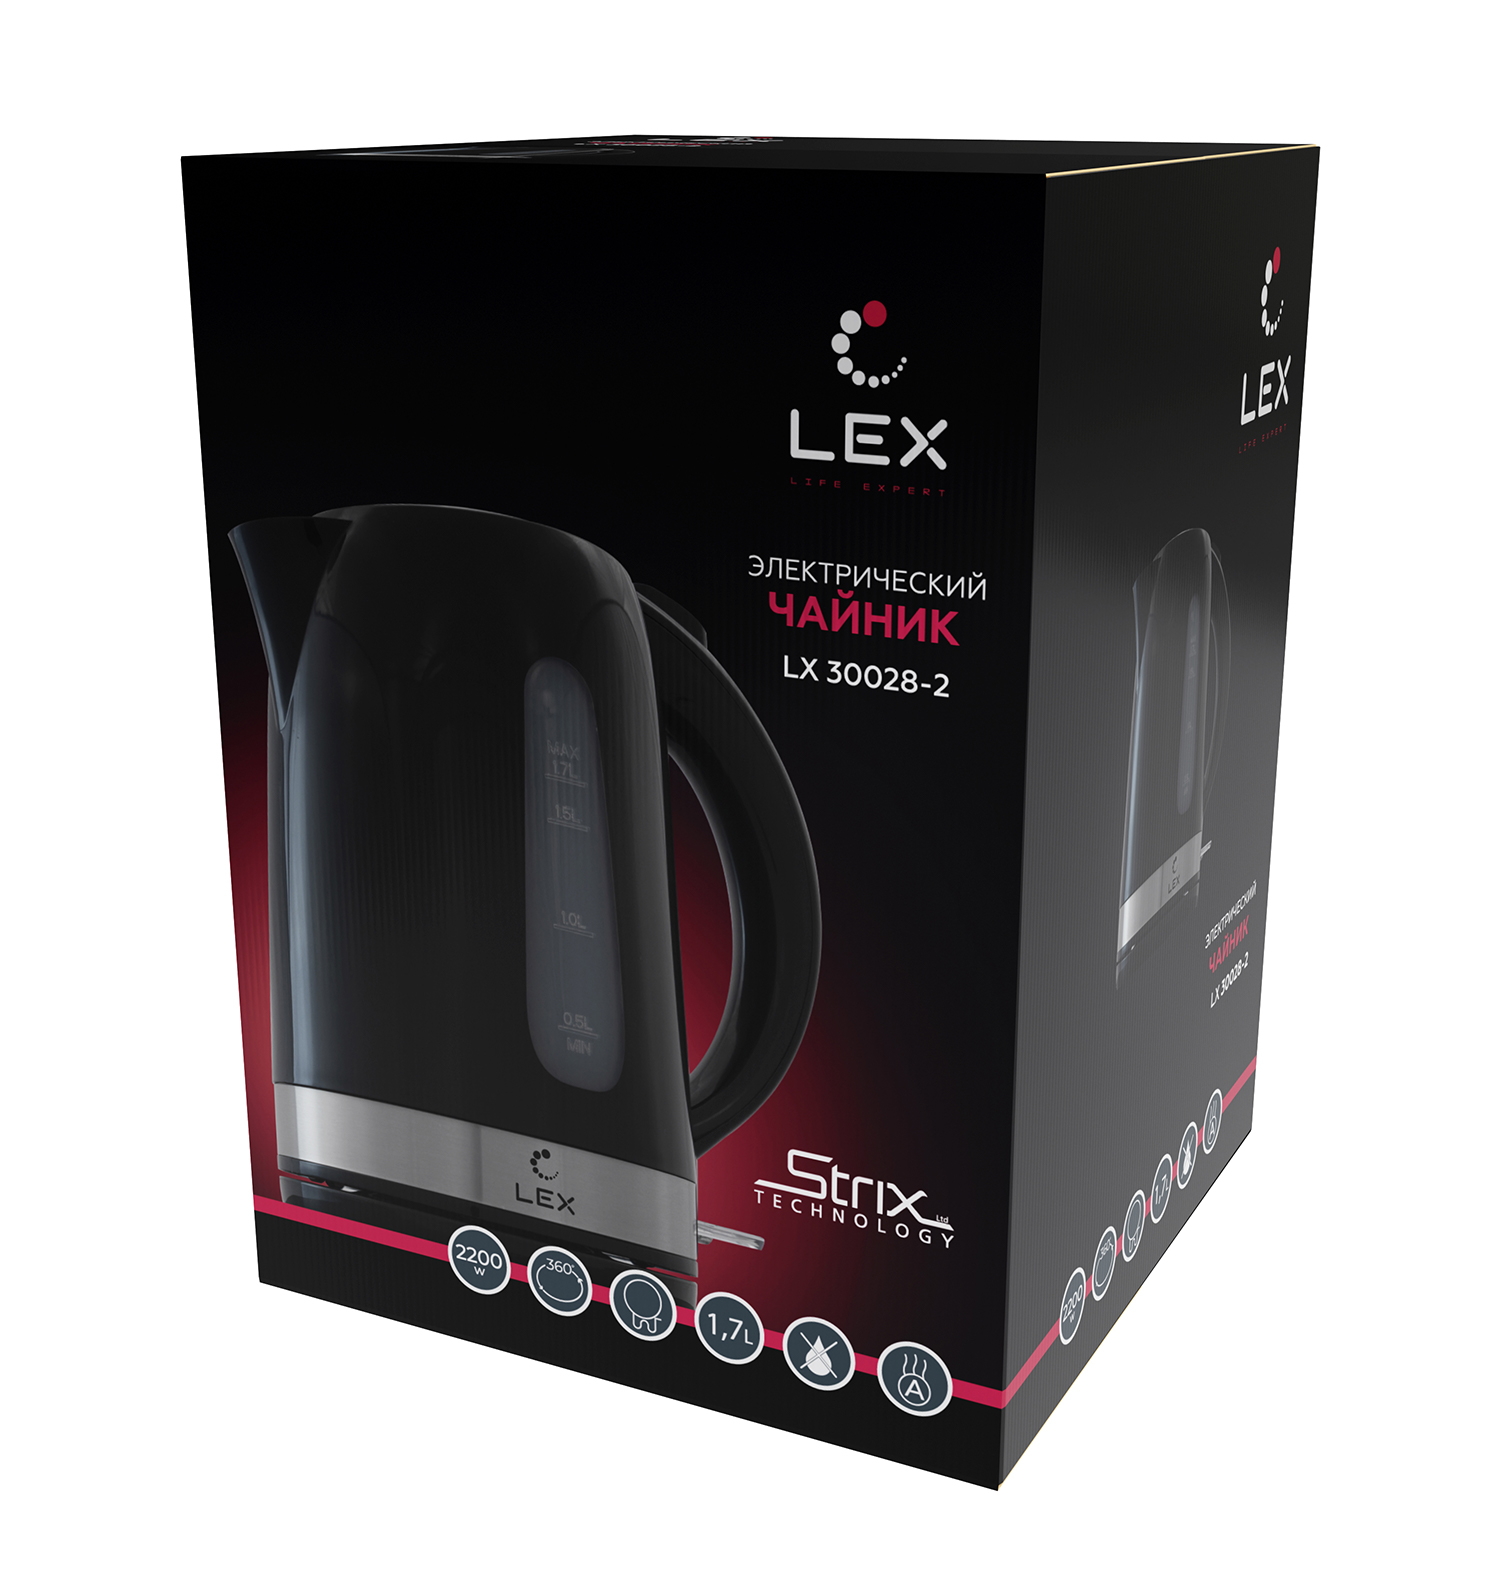 LEX LX 30028-2